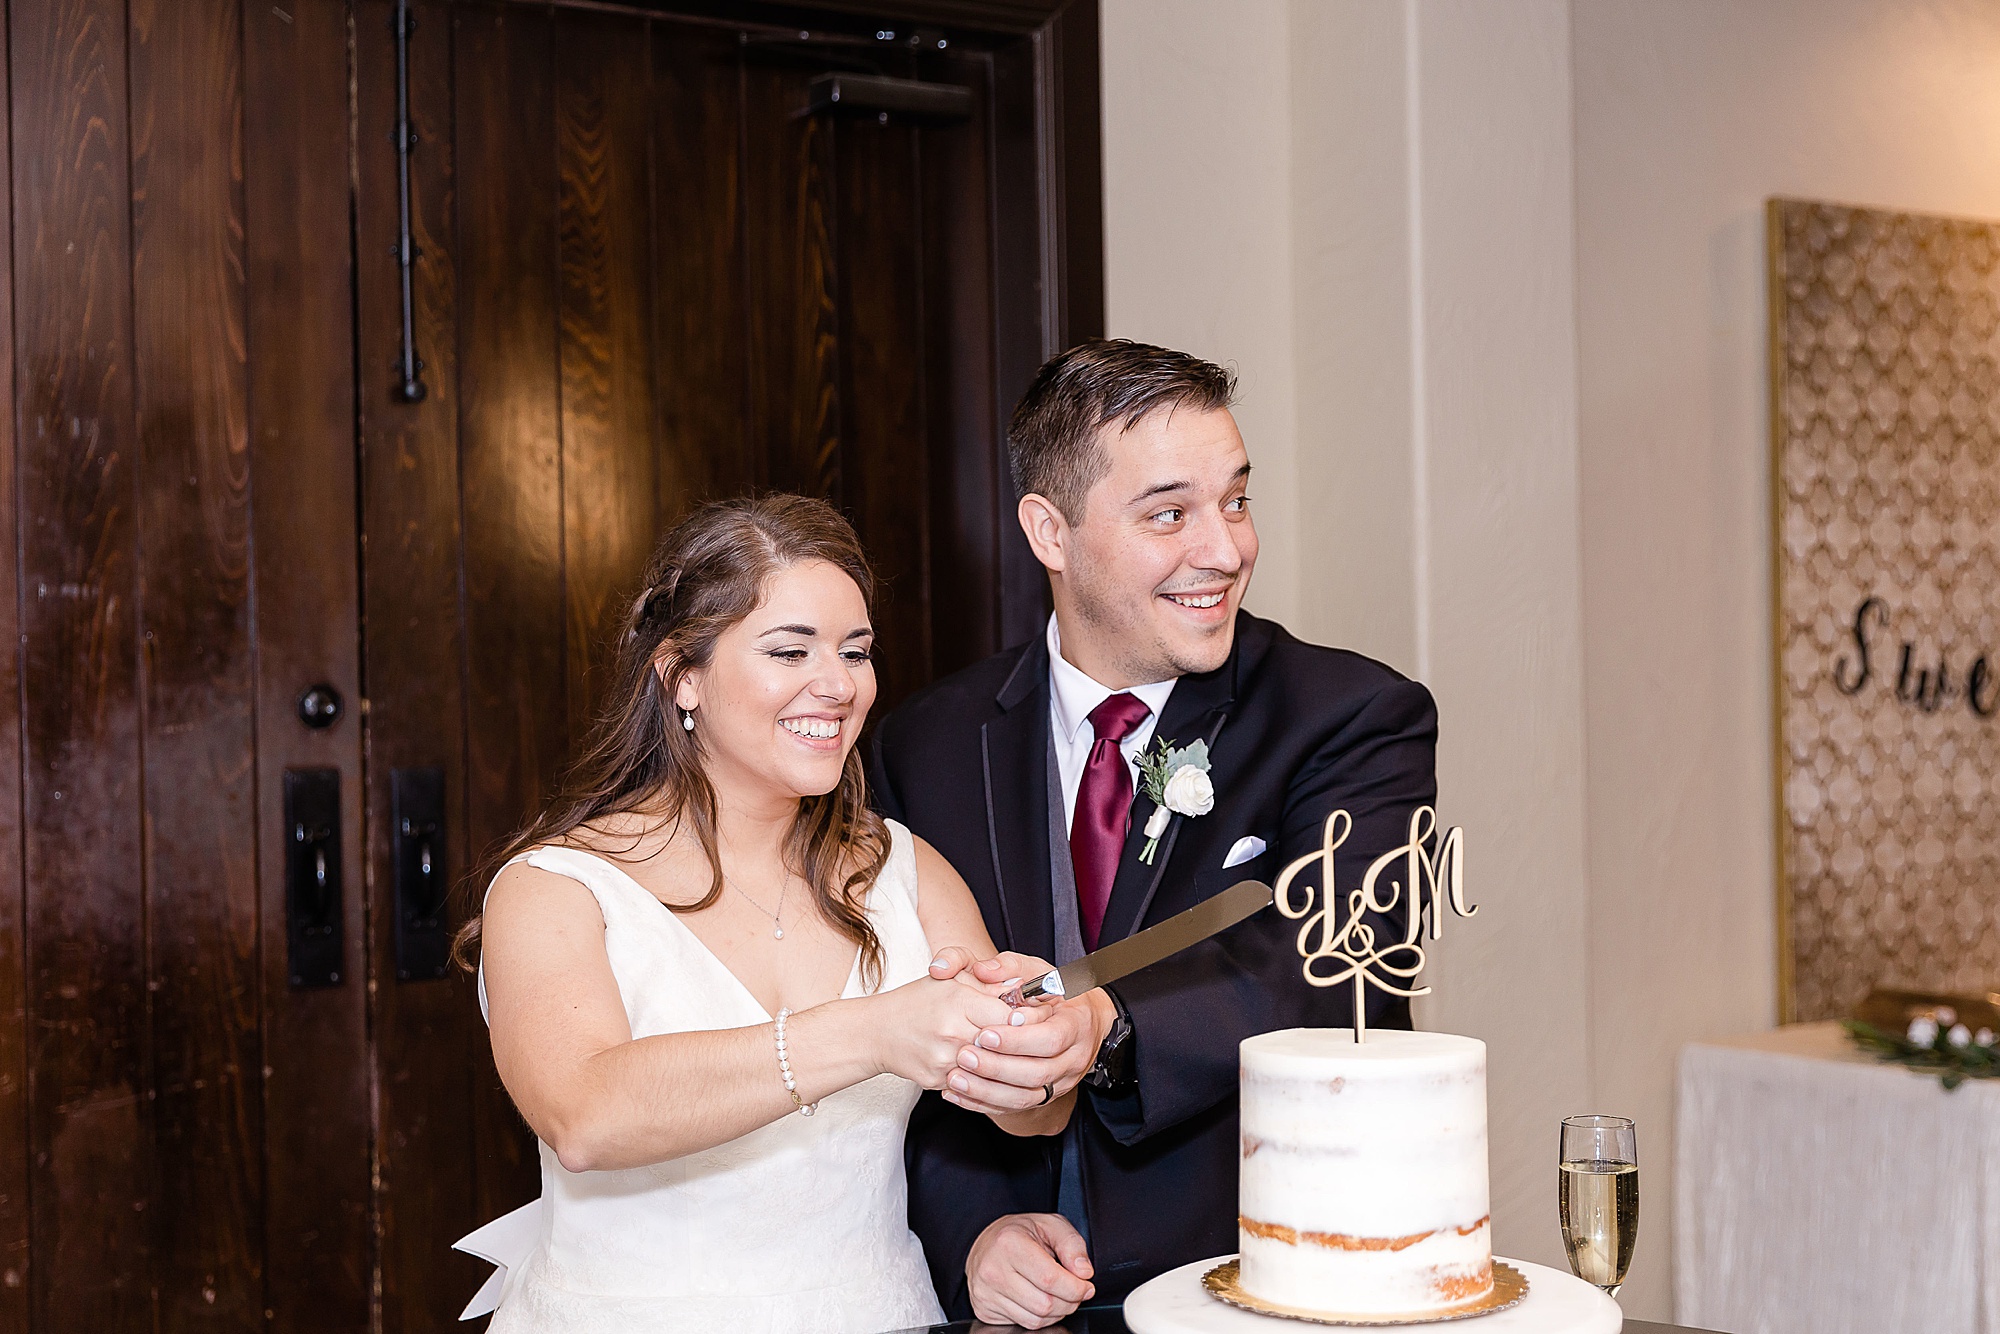 bride and groom cut wedding cake at Texas wedding reception